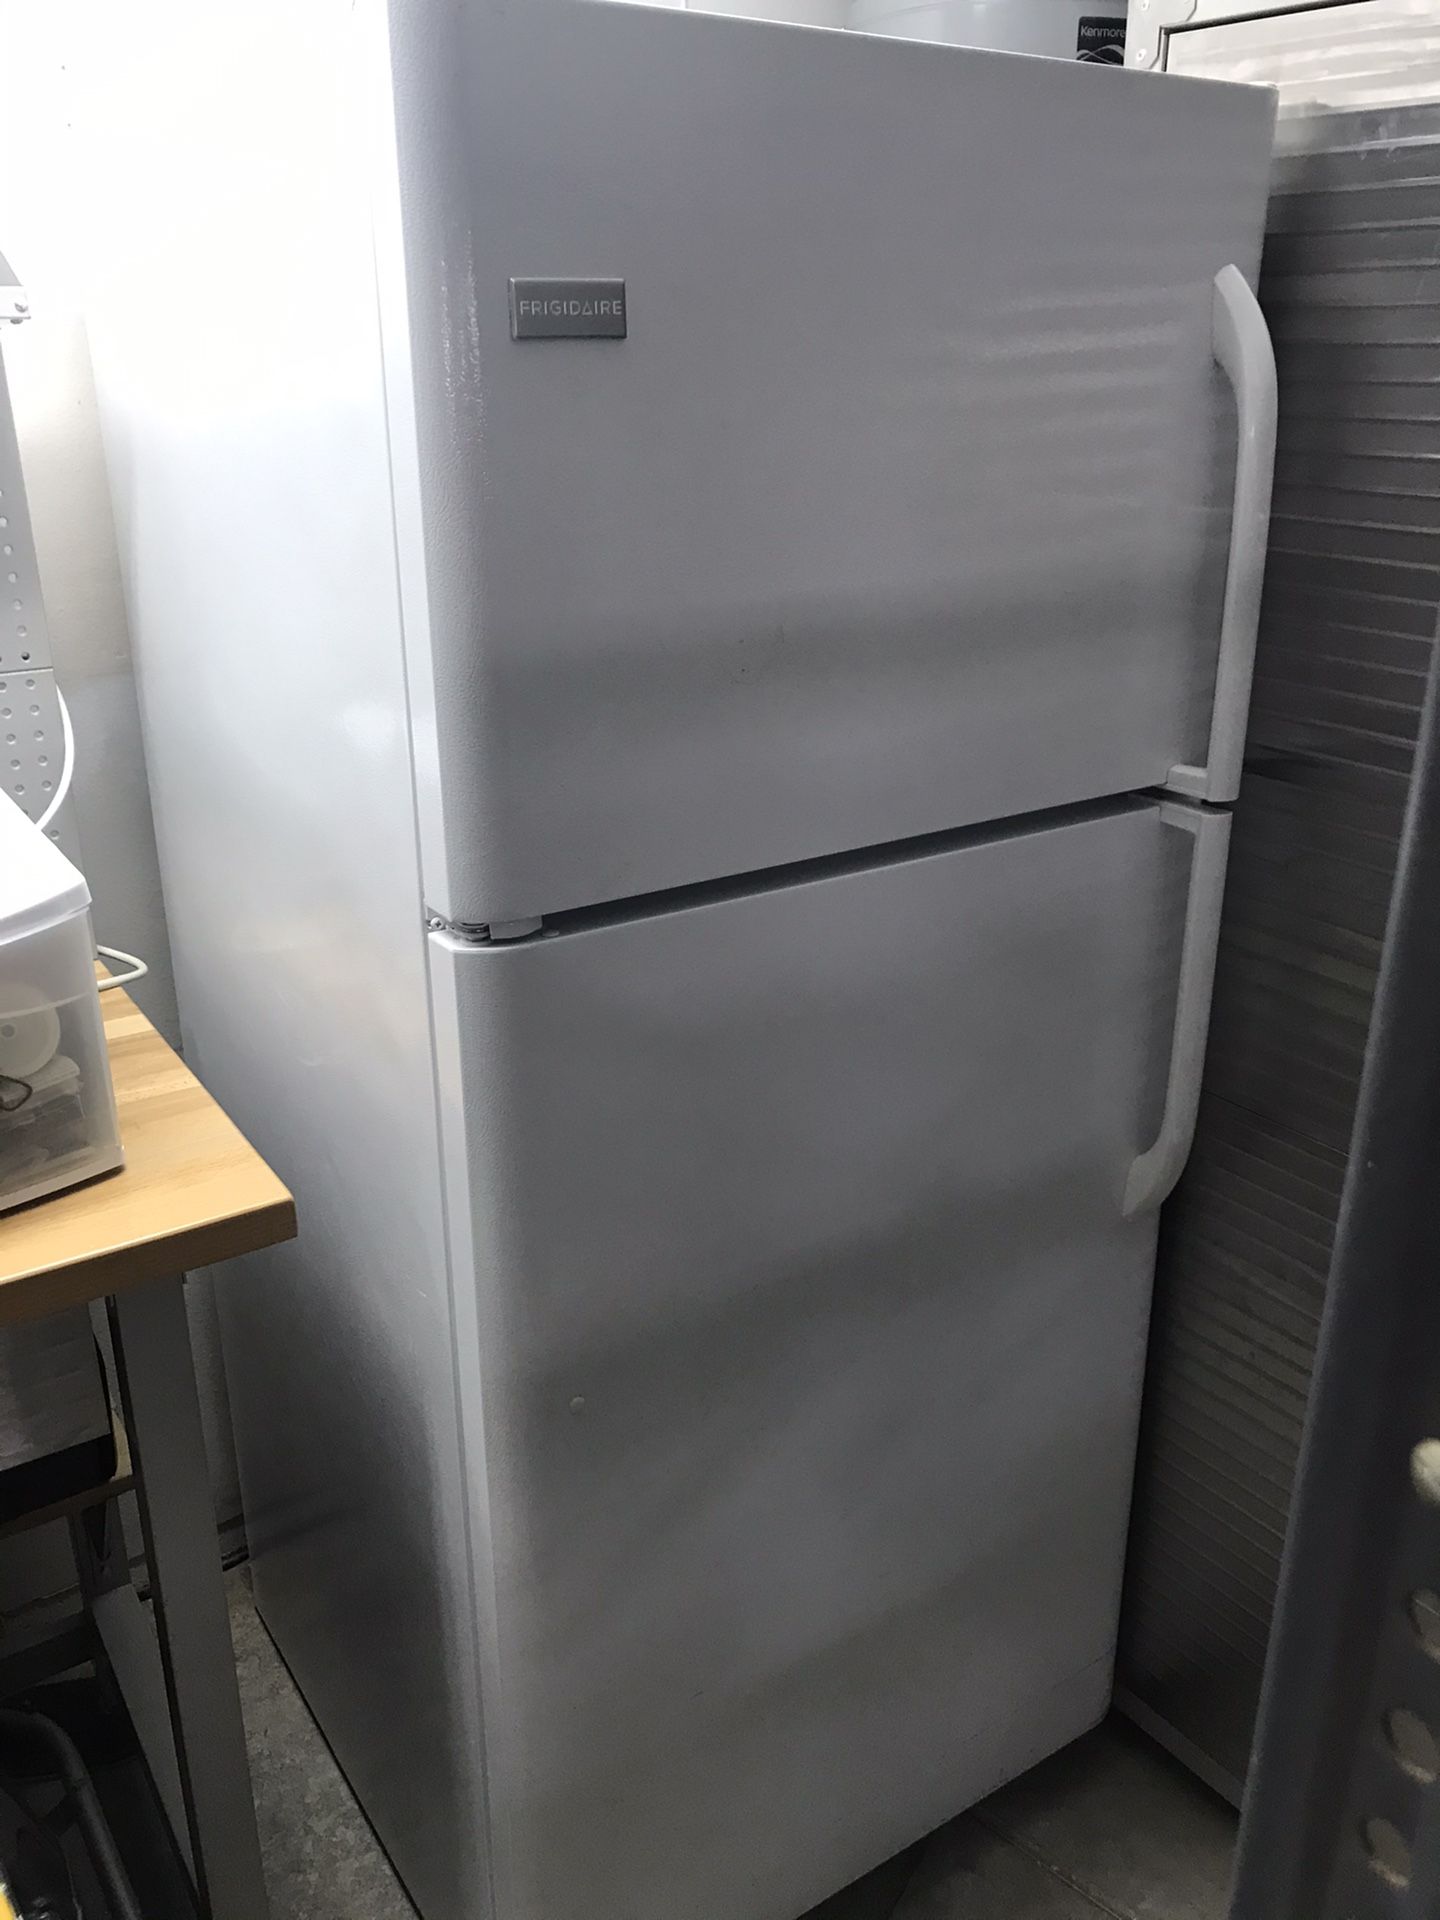 Fridgidaire refrigerator with top freezer